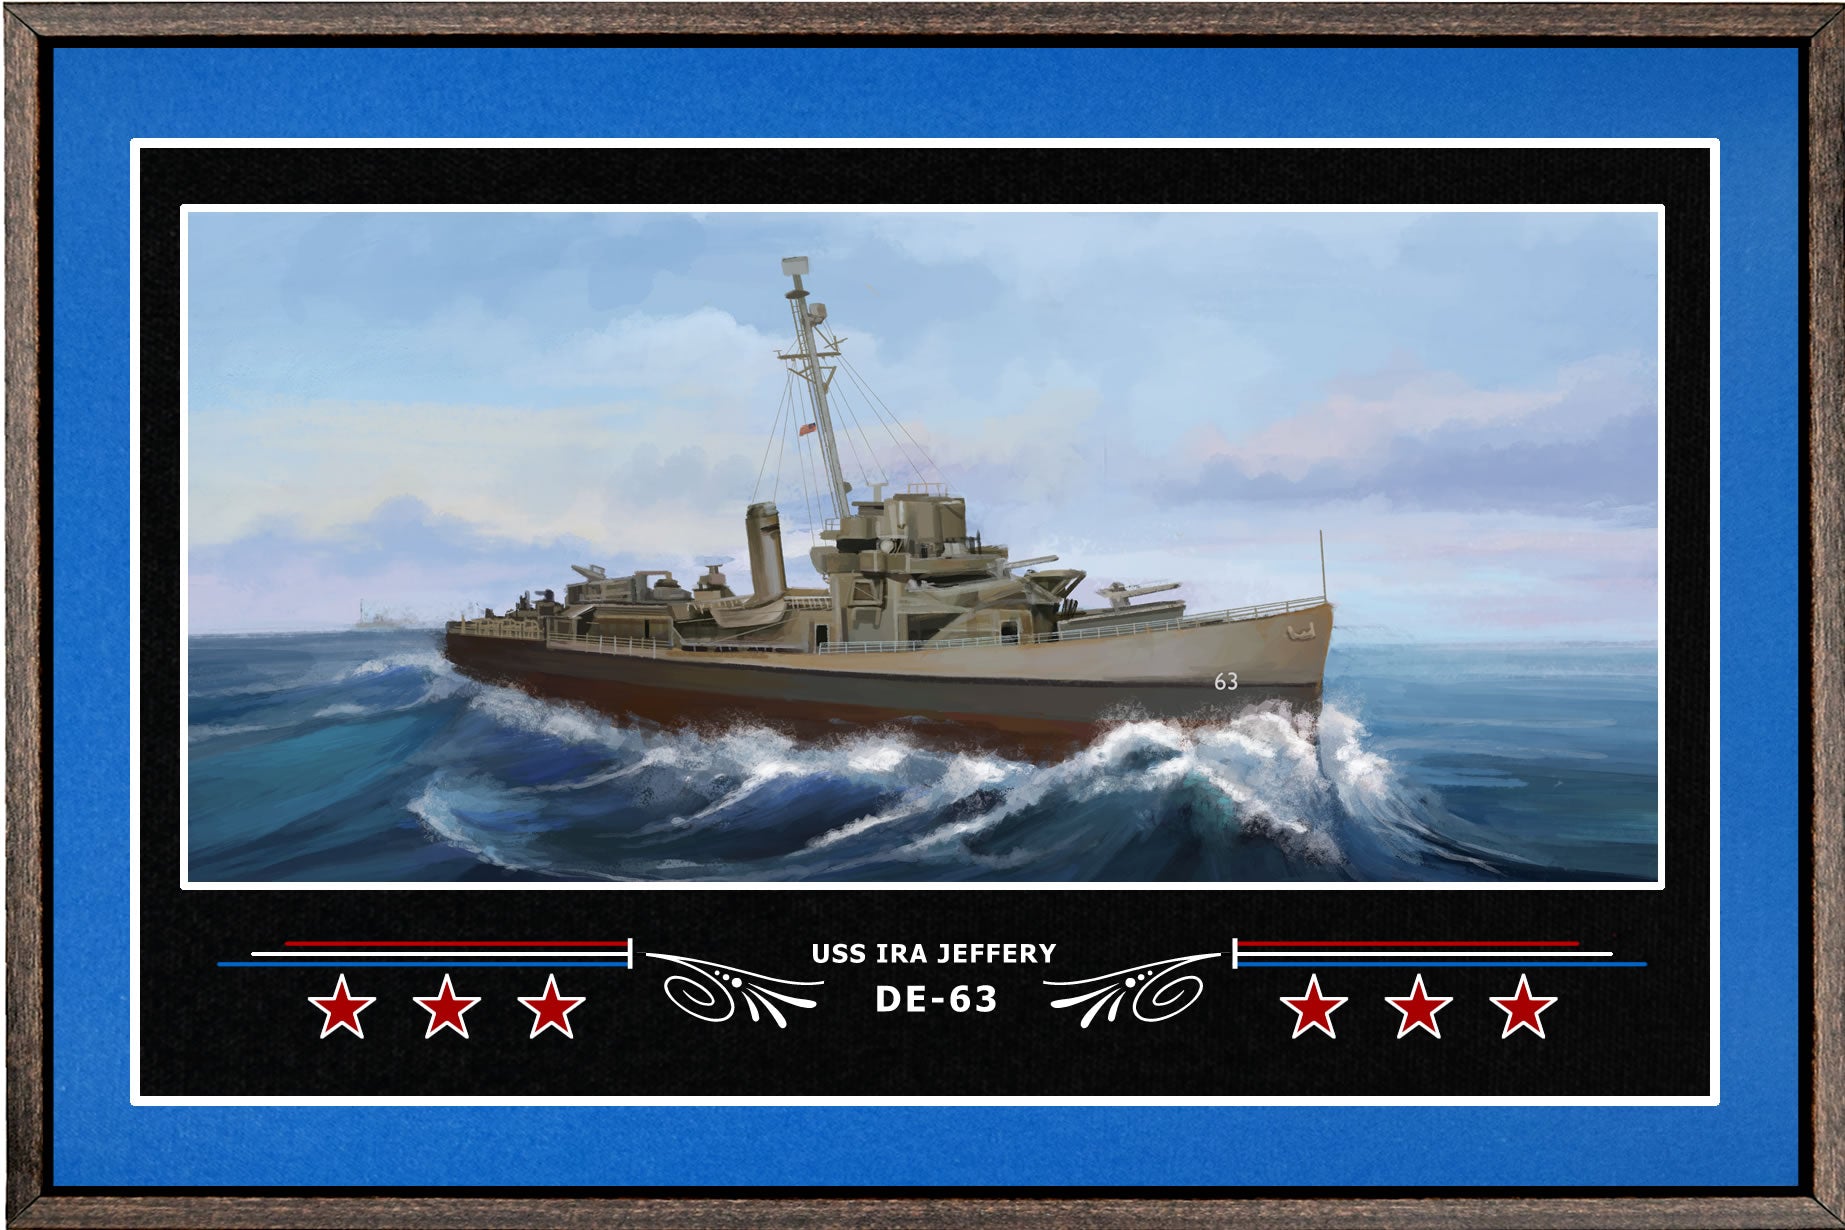 USS IRA JEFFERY DE 63 BOX FRAMED CANVAS ART BLUE